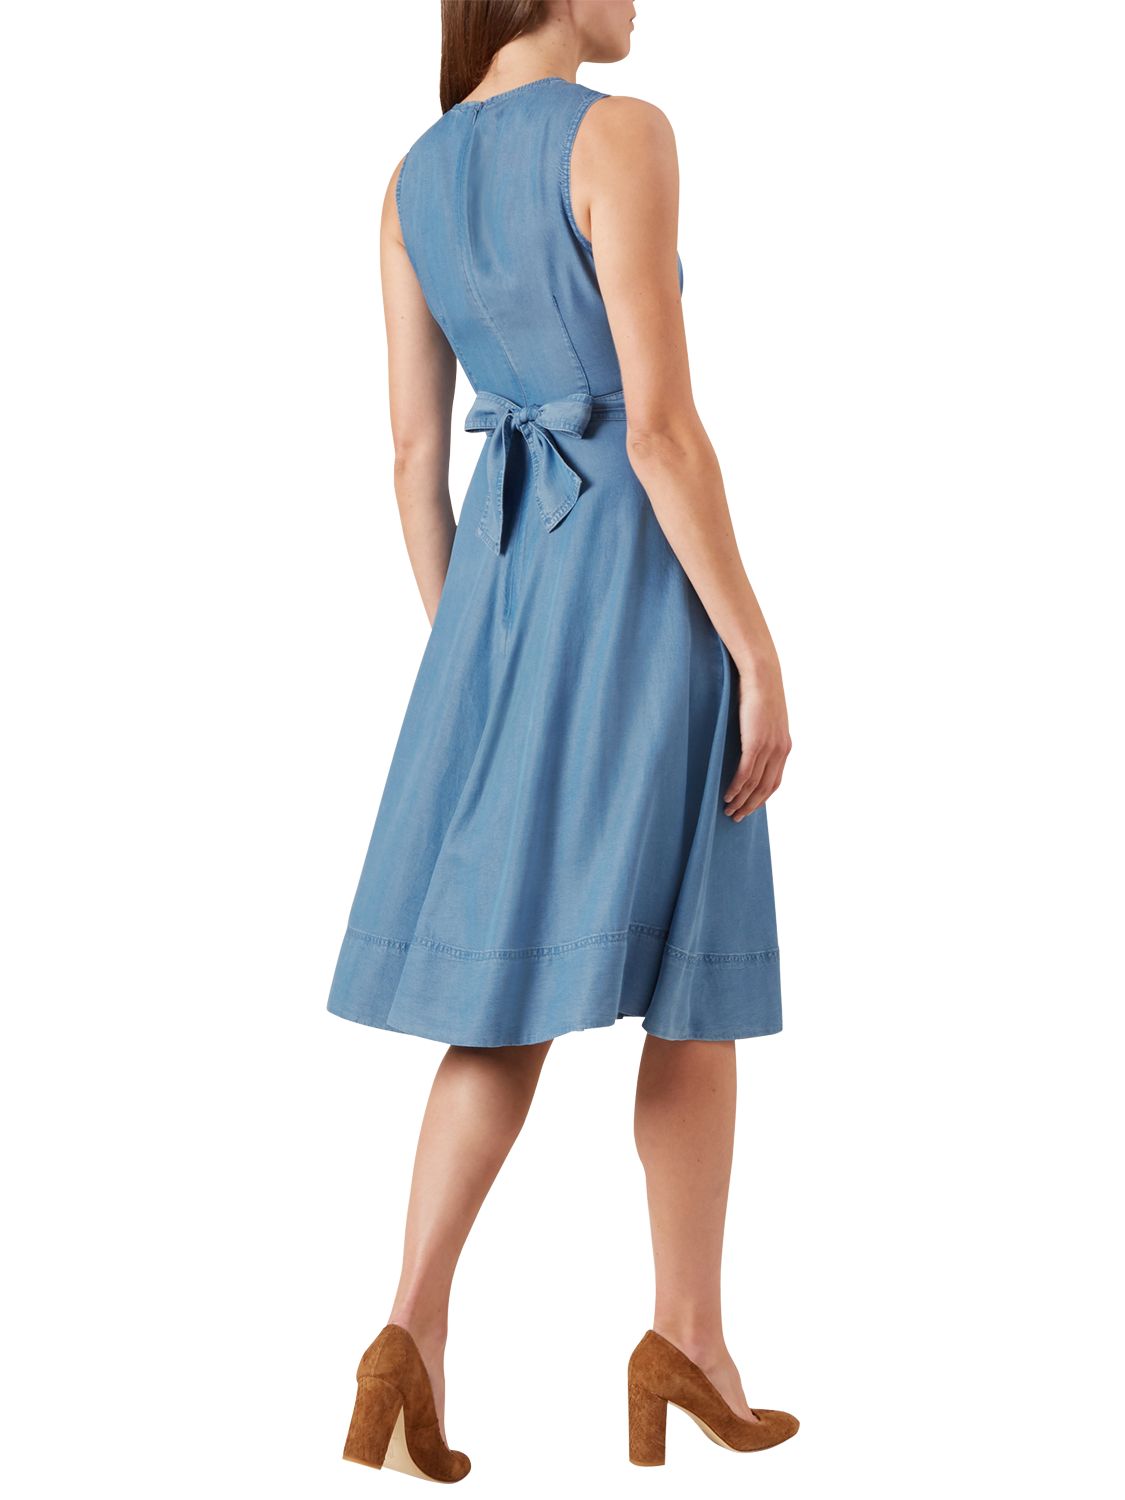 Hobbs Kathy Twitchill Dress, Blue at John Lewis & Partners